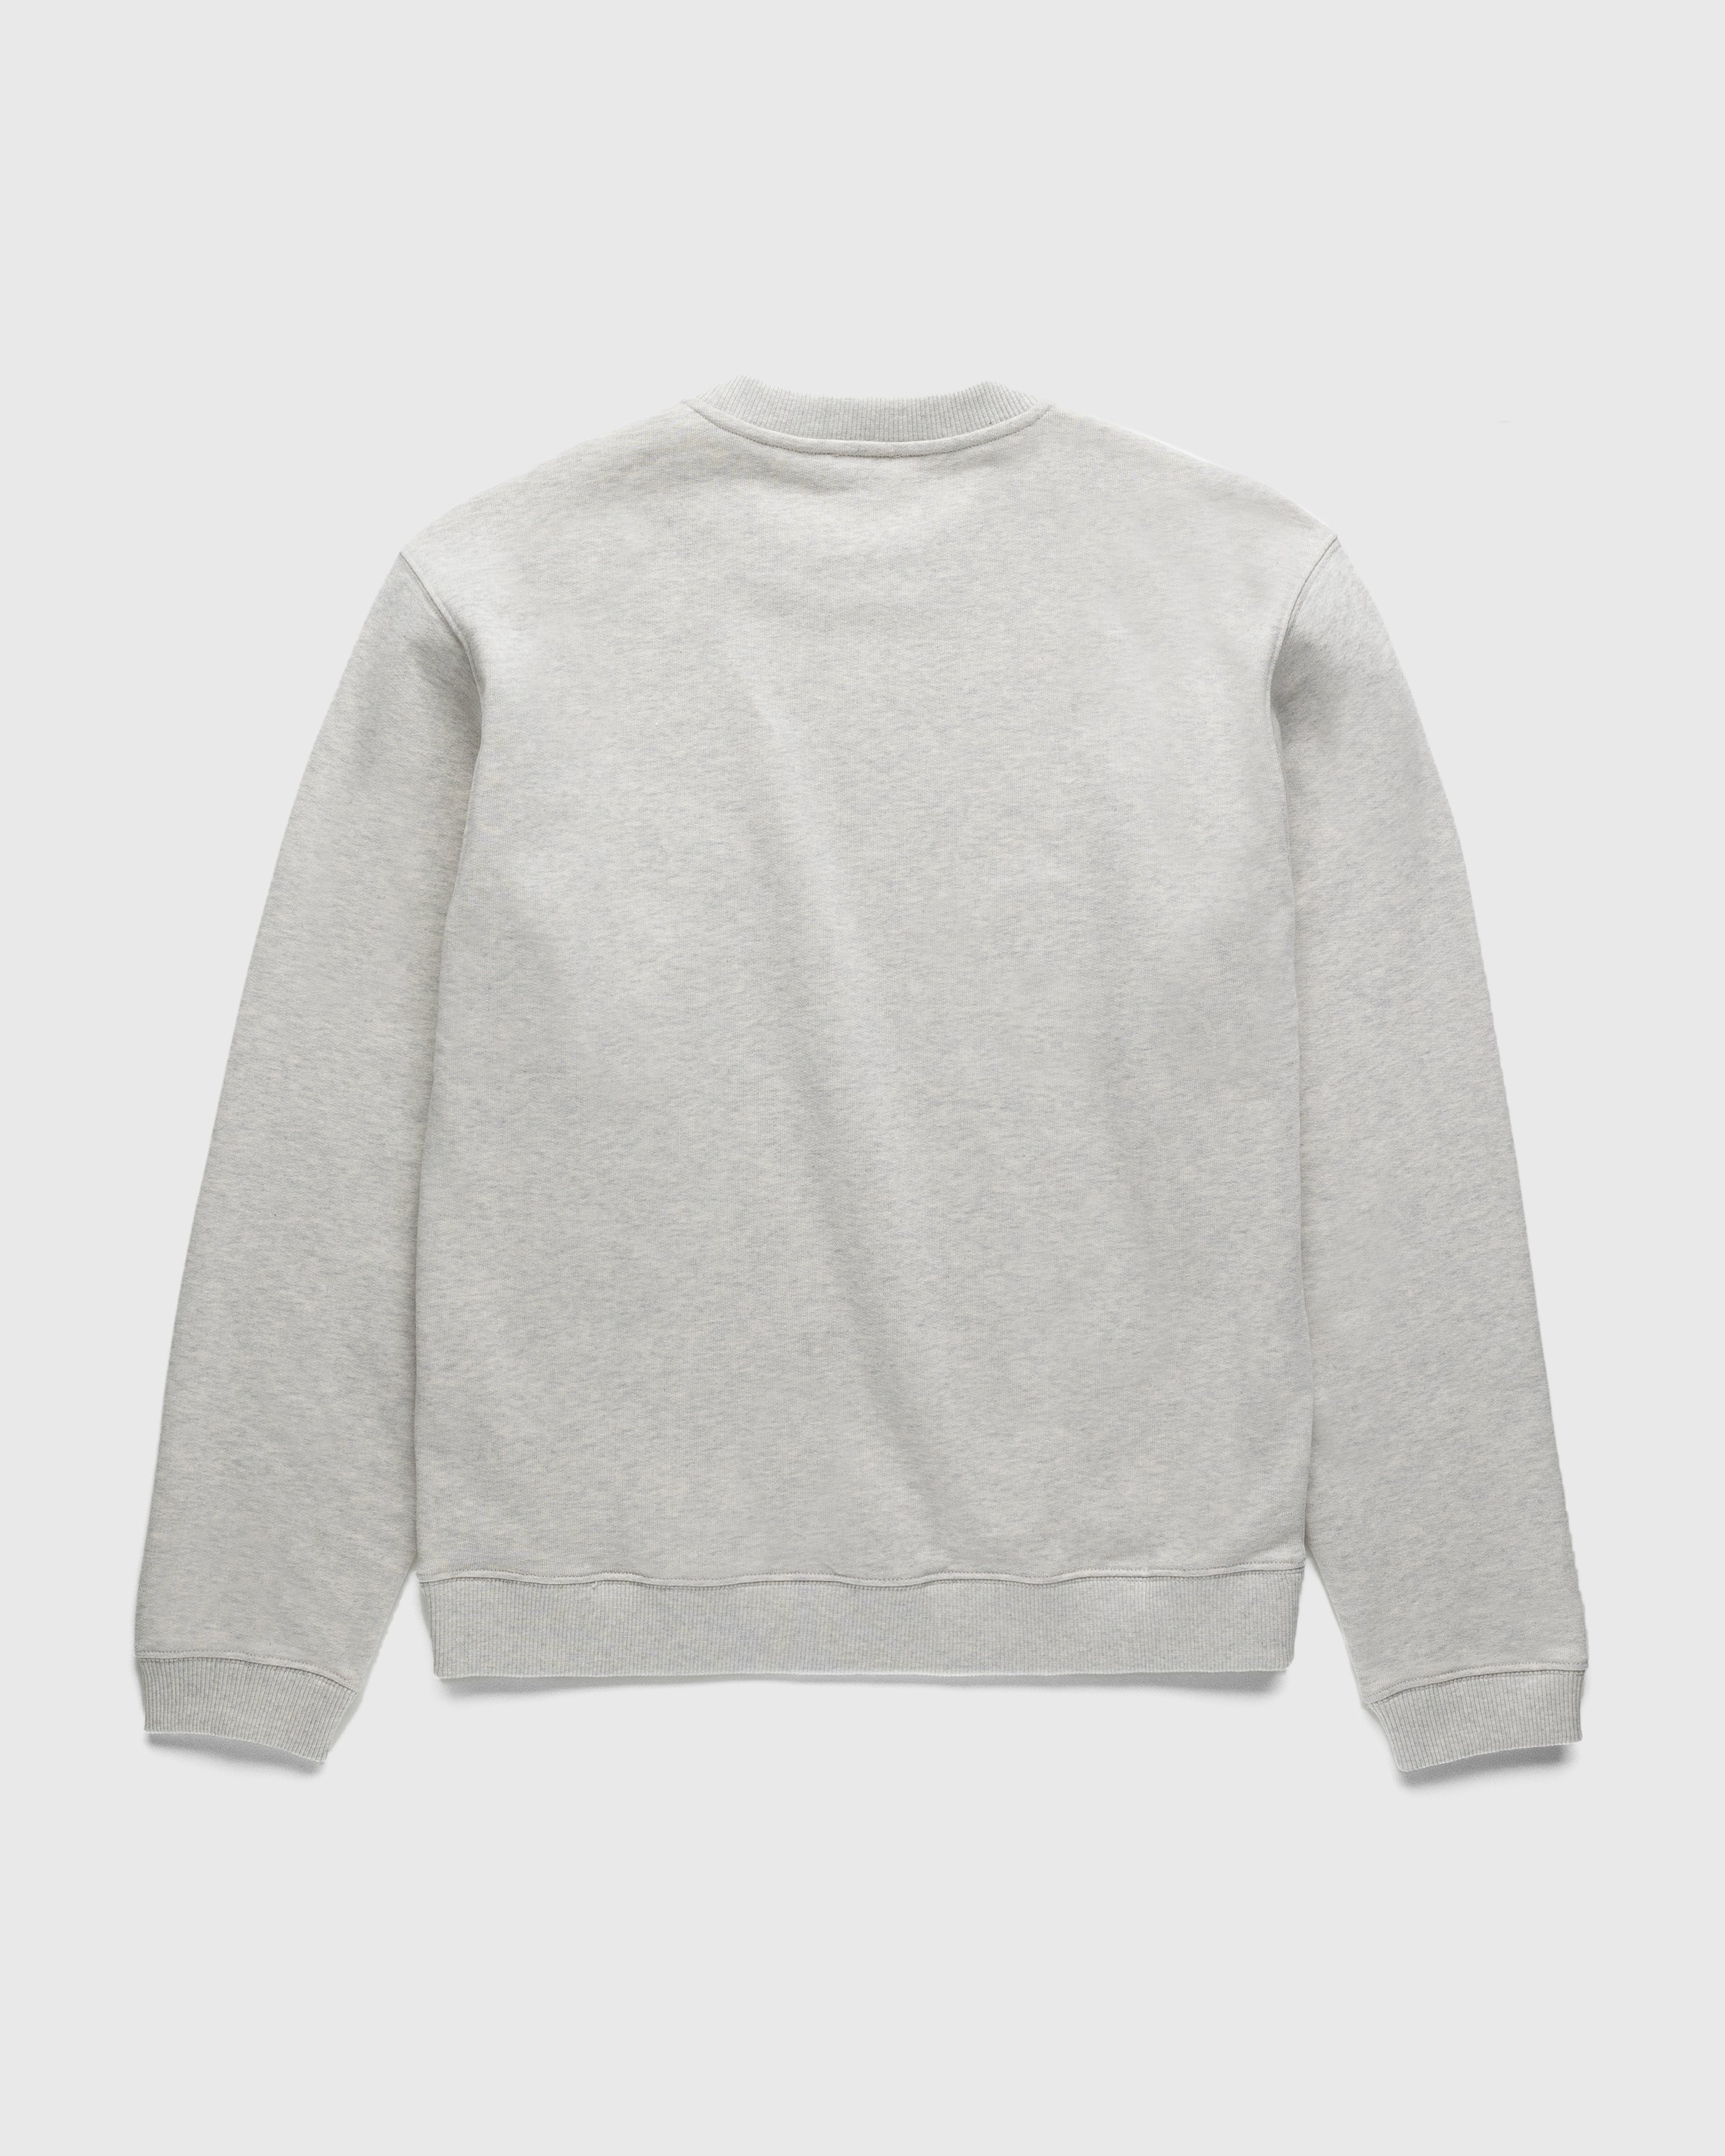 Kenzo - Boke Flower Crest Sweatshirt Pale Grey - Clothing - Grey - Image 2